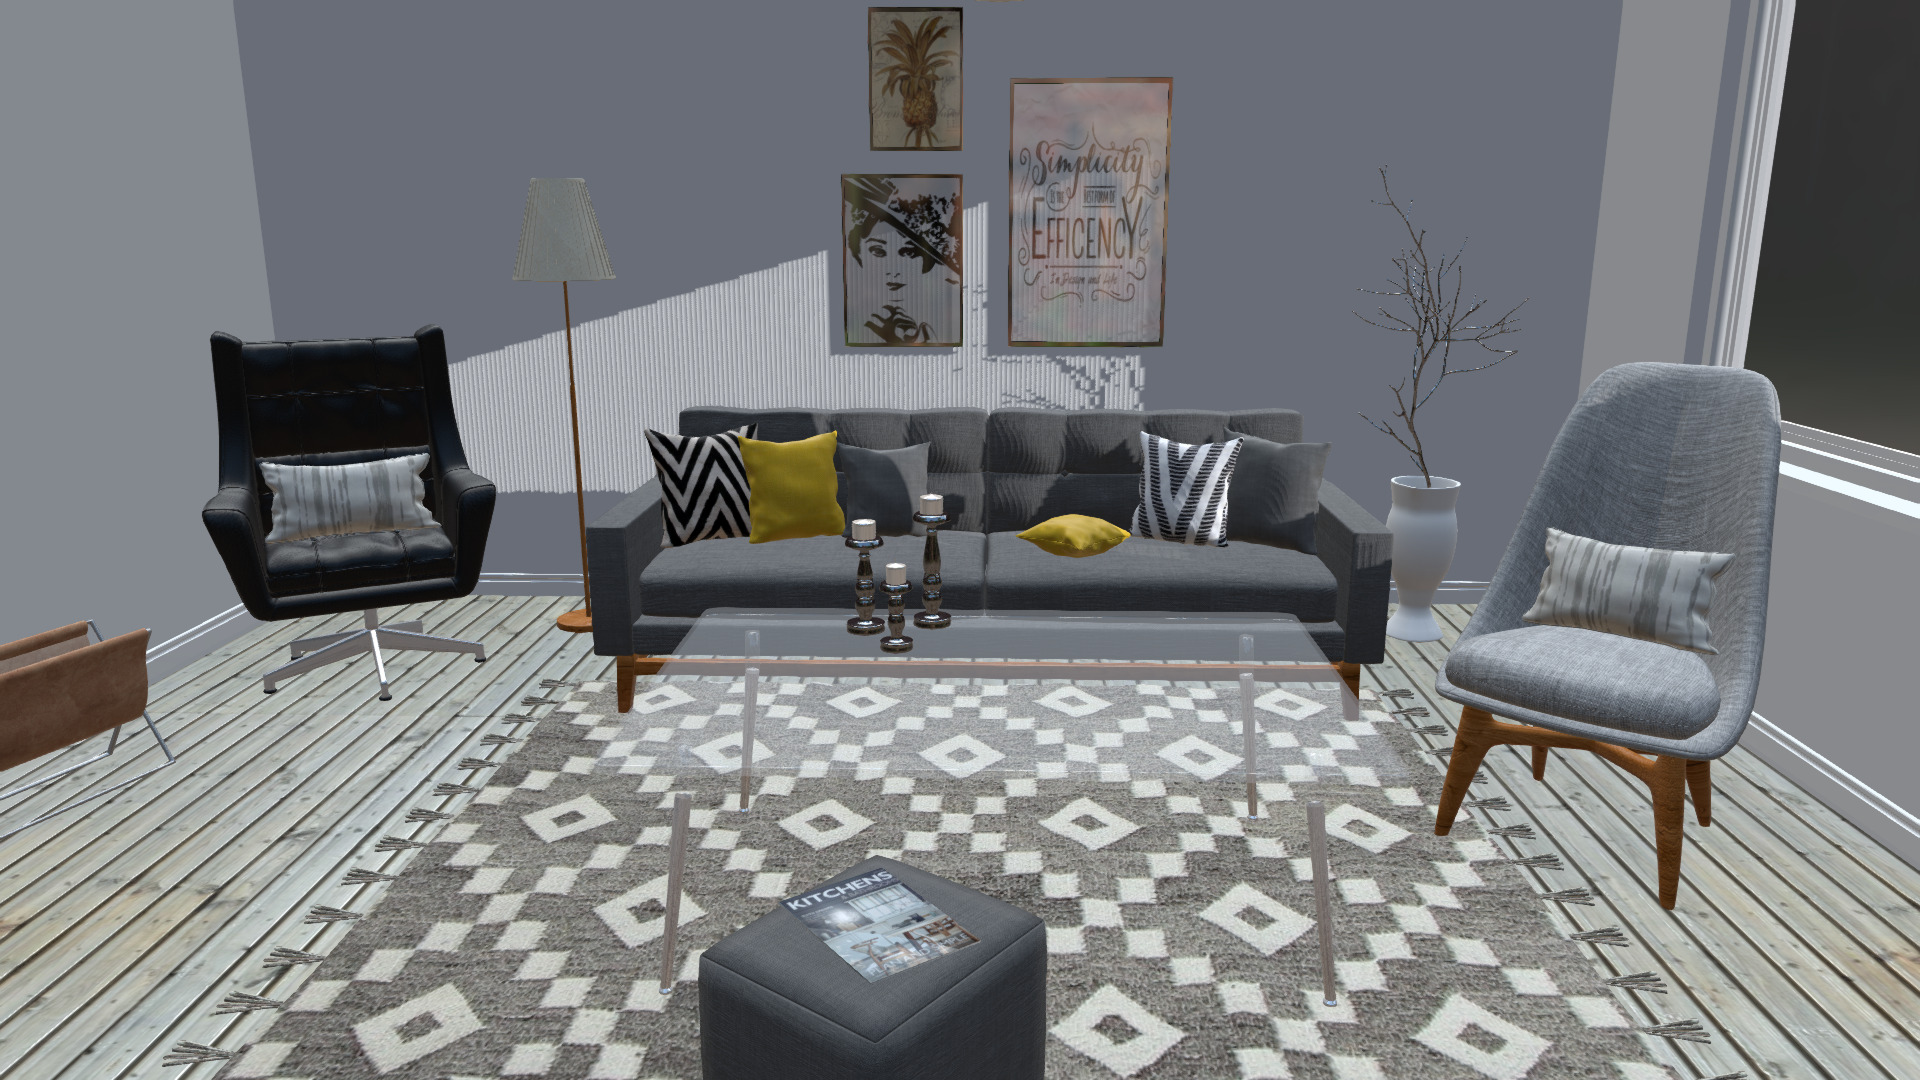 My living room design plan. Modeled in Blender, rendered in Cycles render engine 3d model